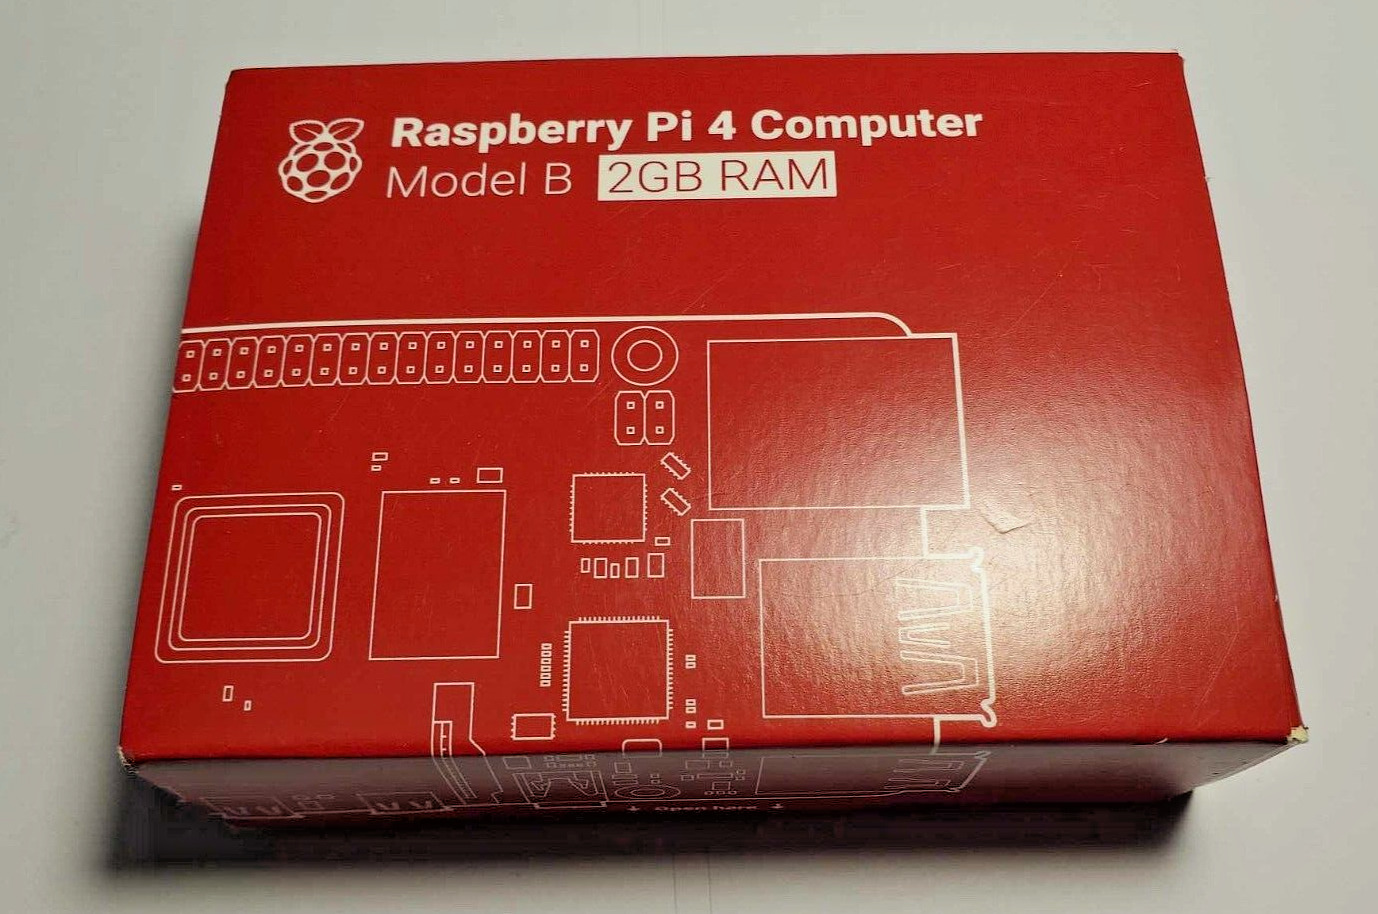 Raspberry Pi 4 Model B 2GB RAM Computer - BRAND NEW / SEALED - SHIPS IMMEDIATELY